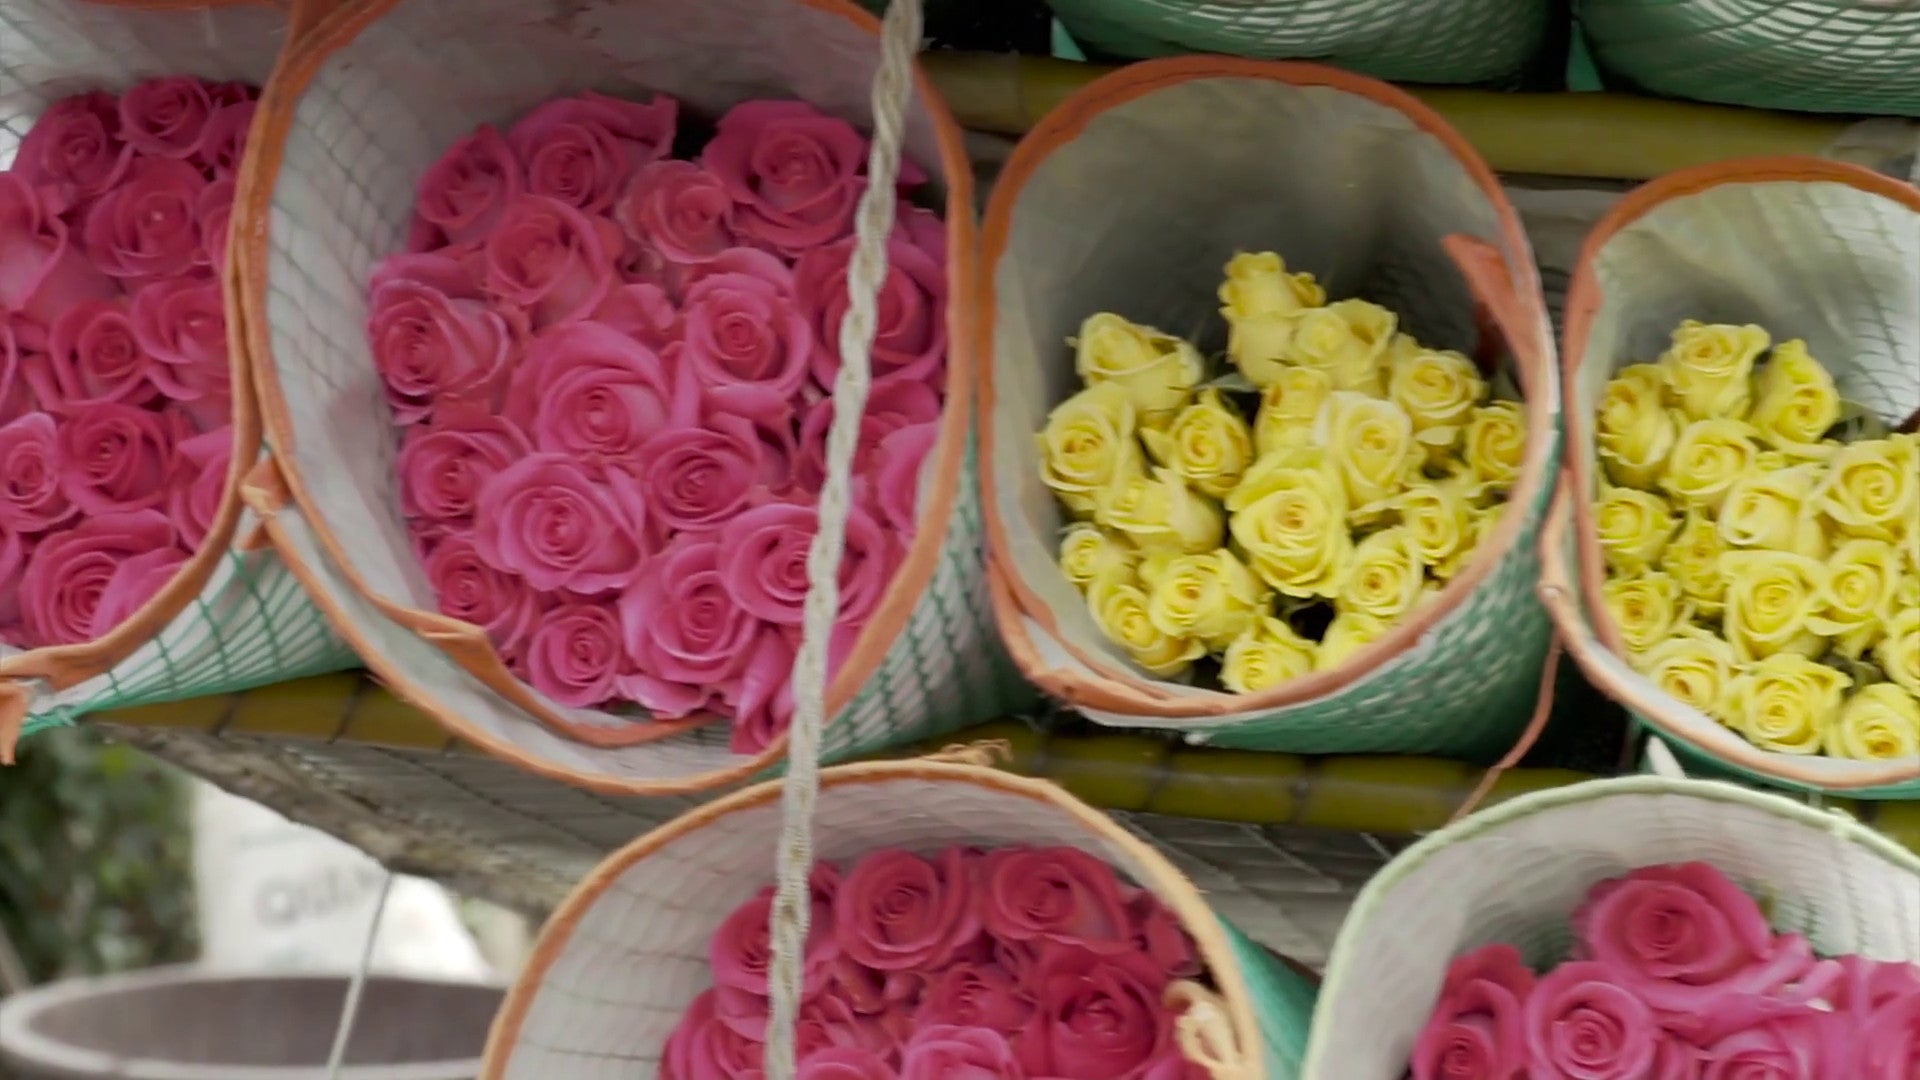 Rose Farmers, Farm Fresh Roses